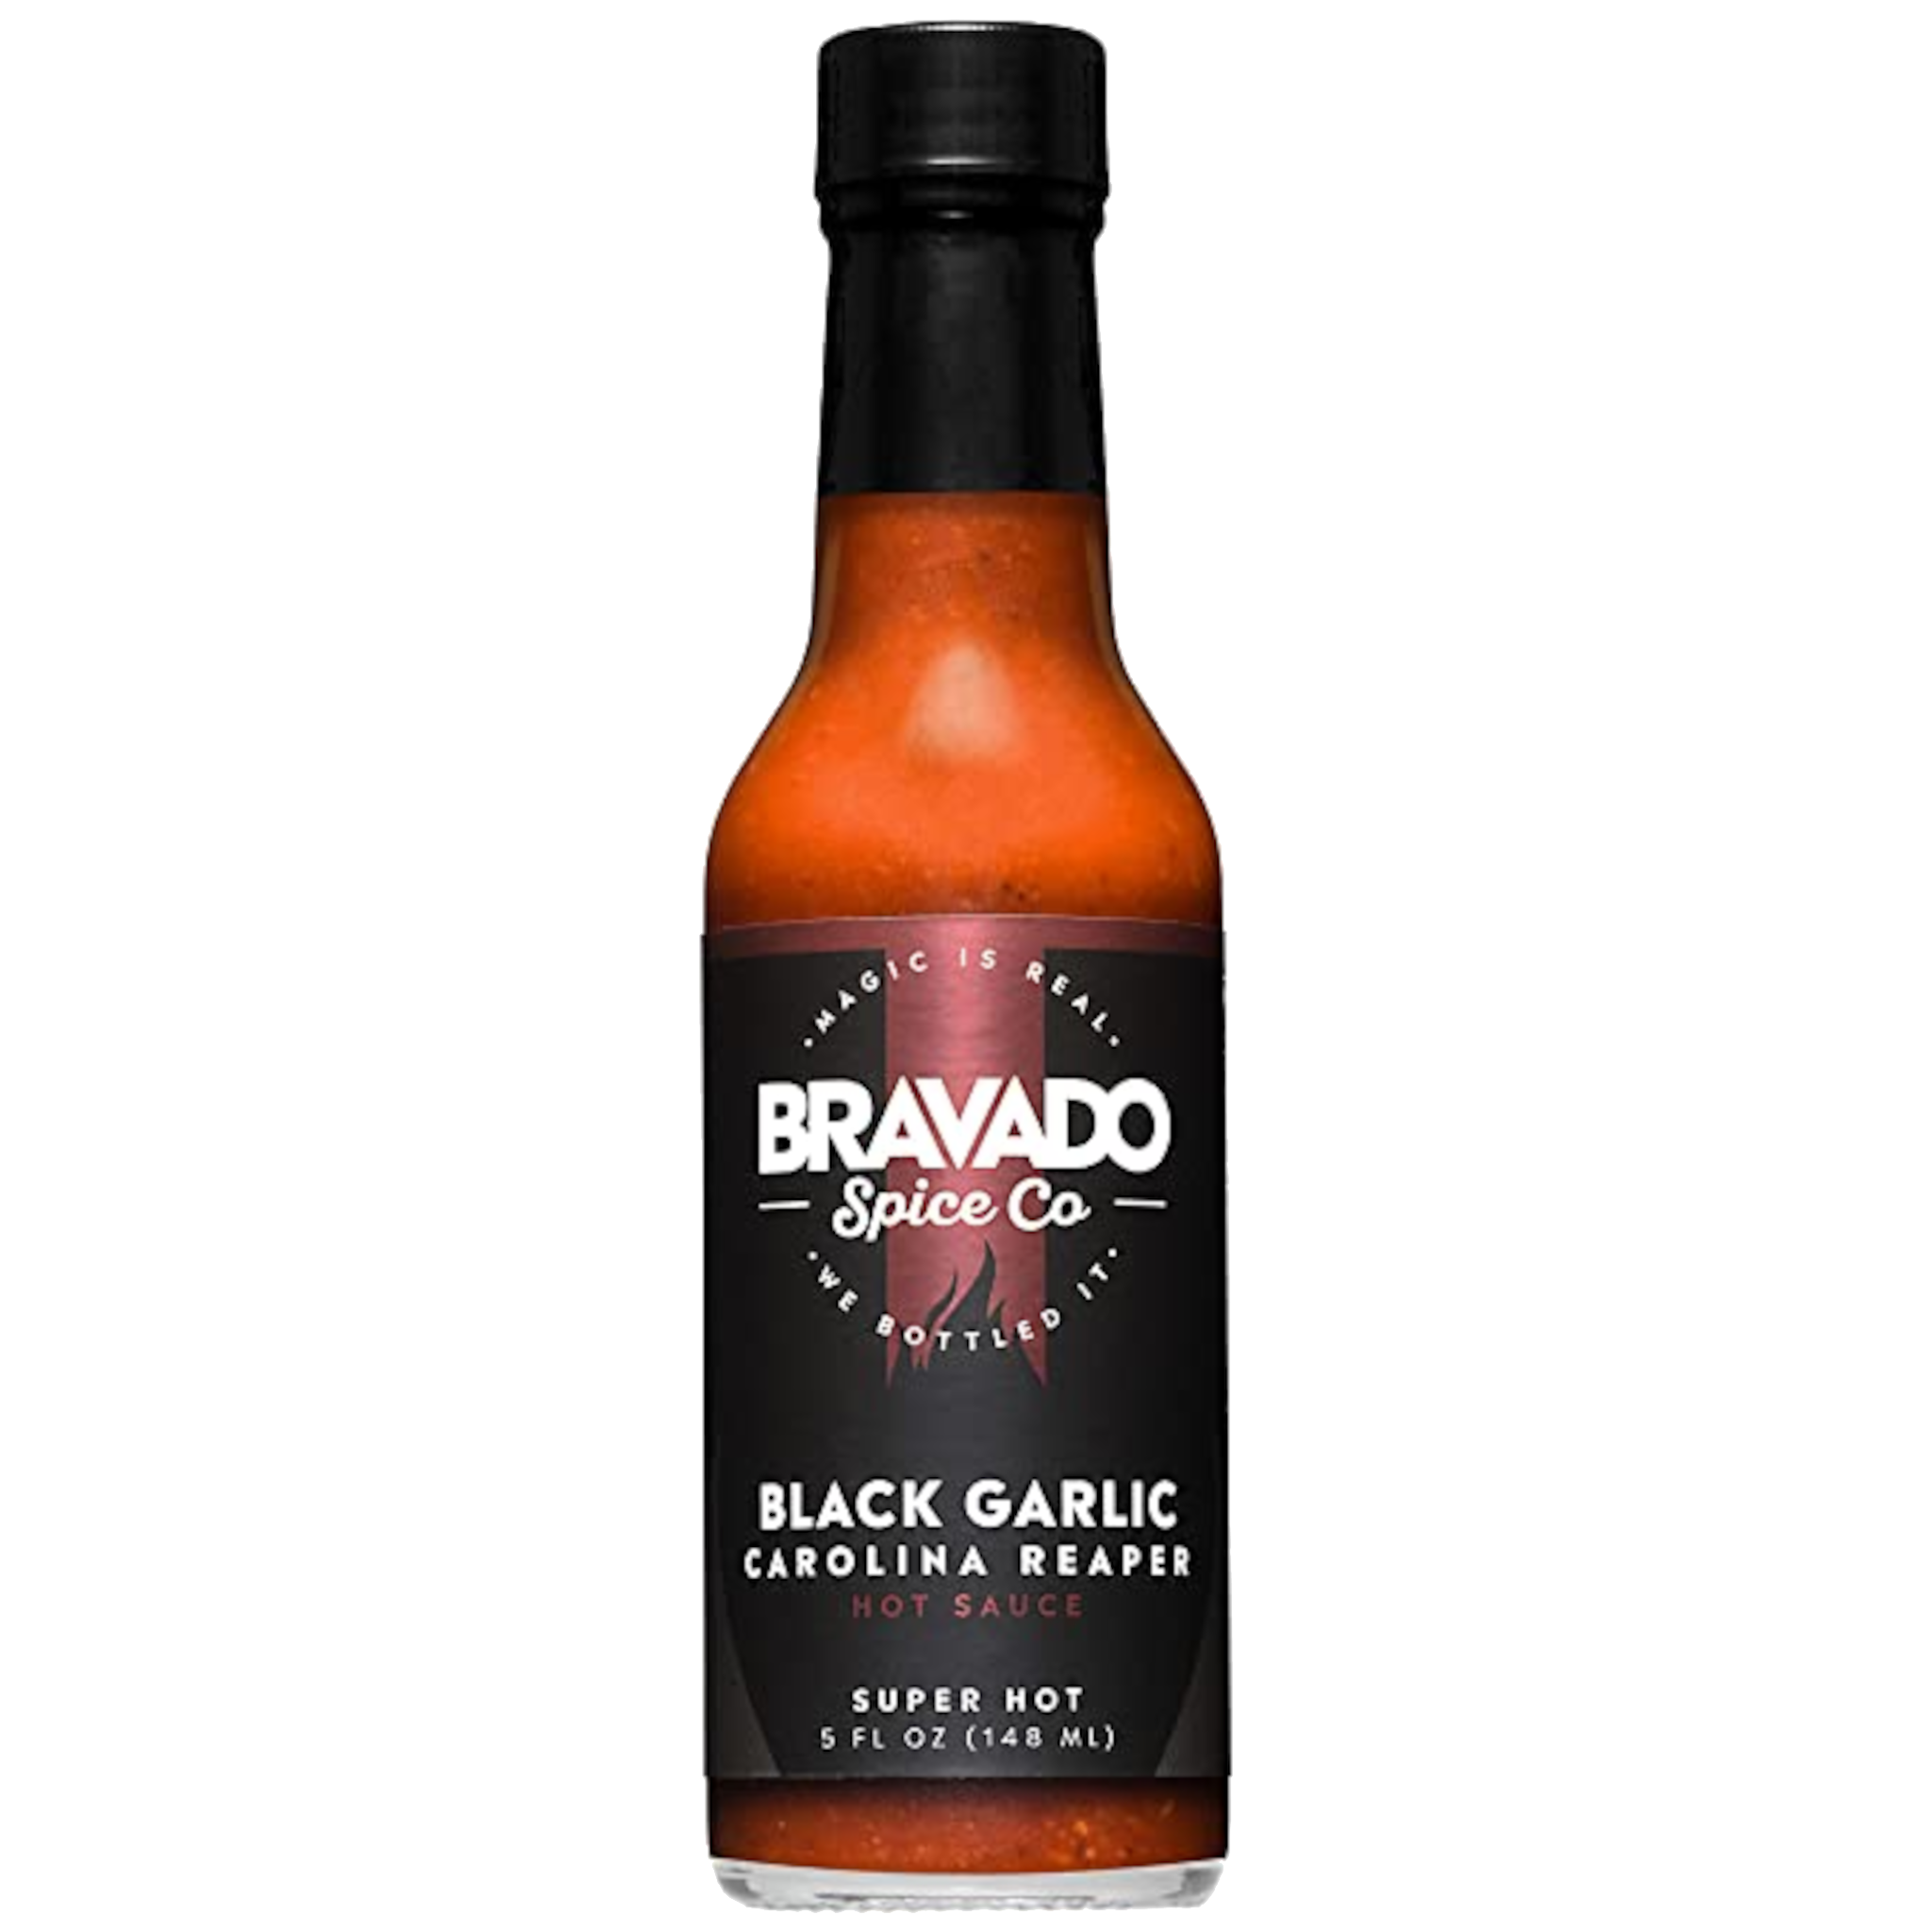 Black Garlic Carolina Reaper Hot Sauce